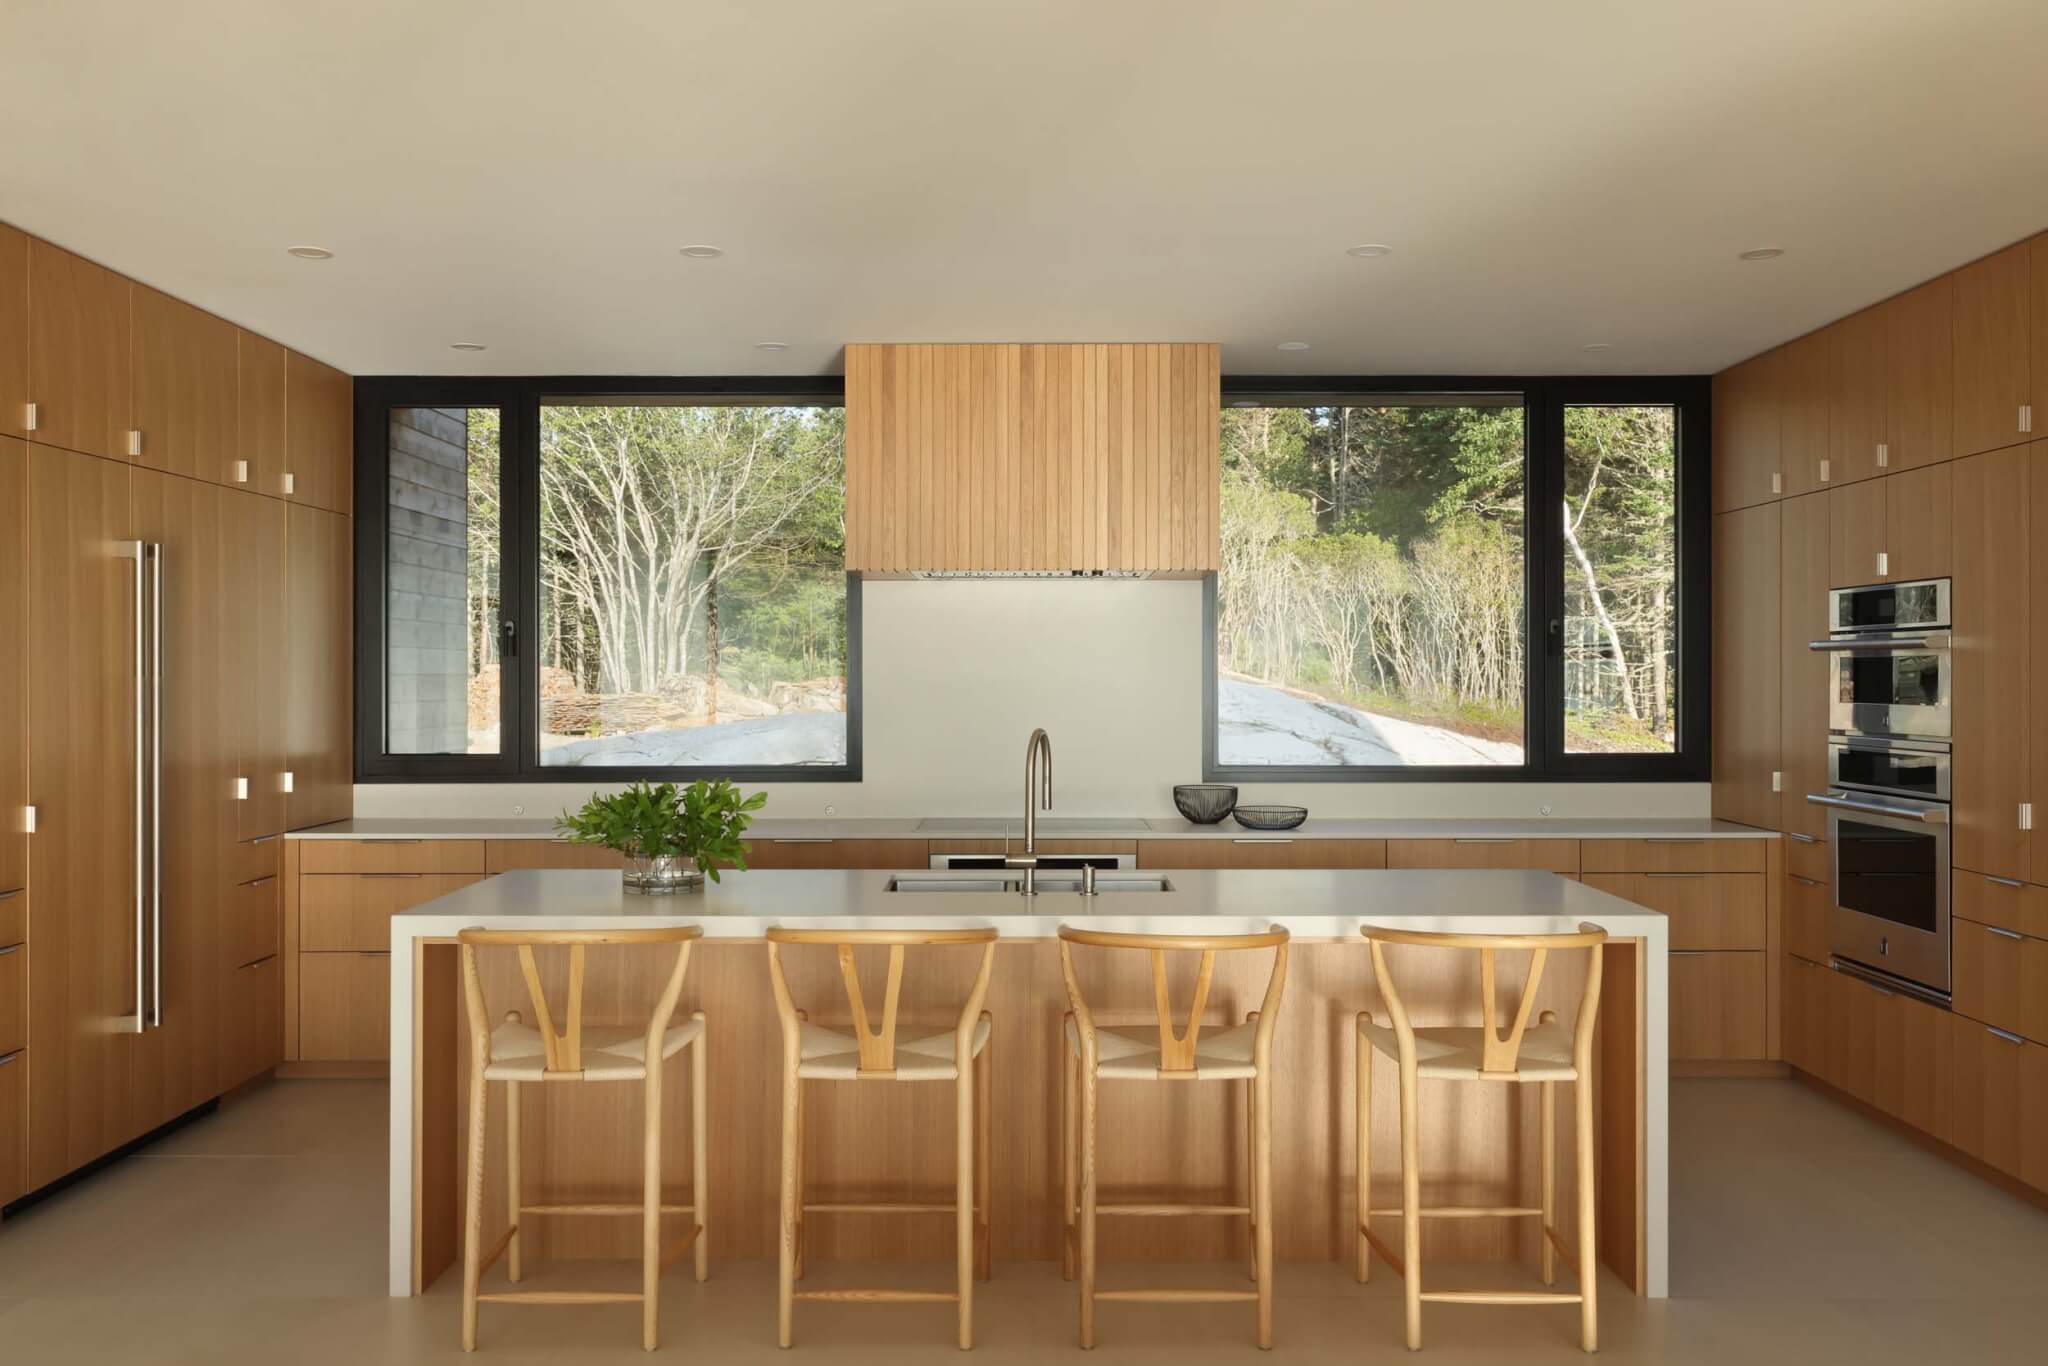 kitchen with warm, wood tones